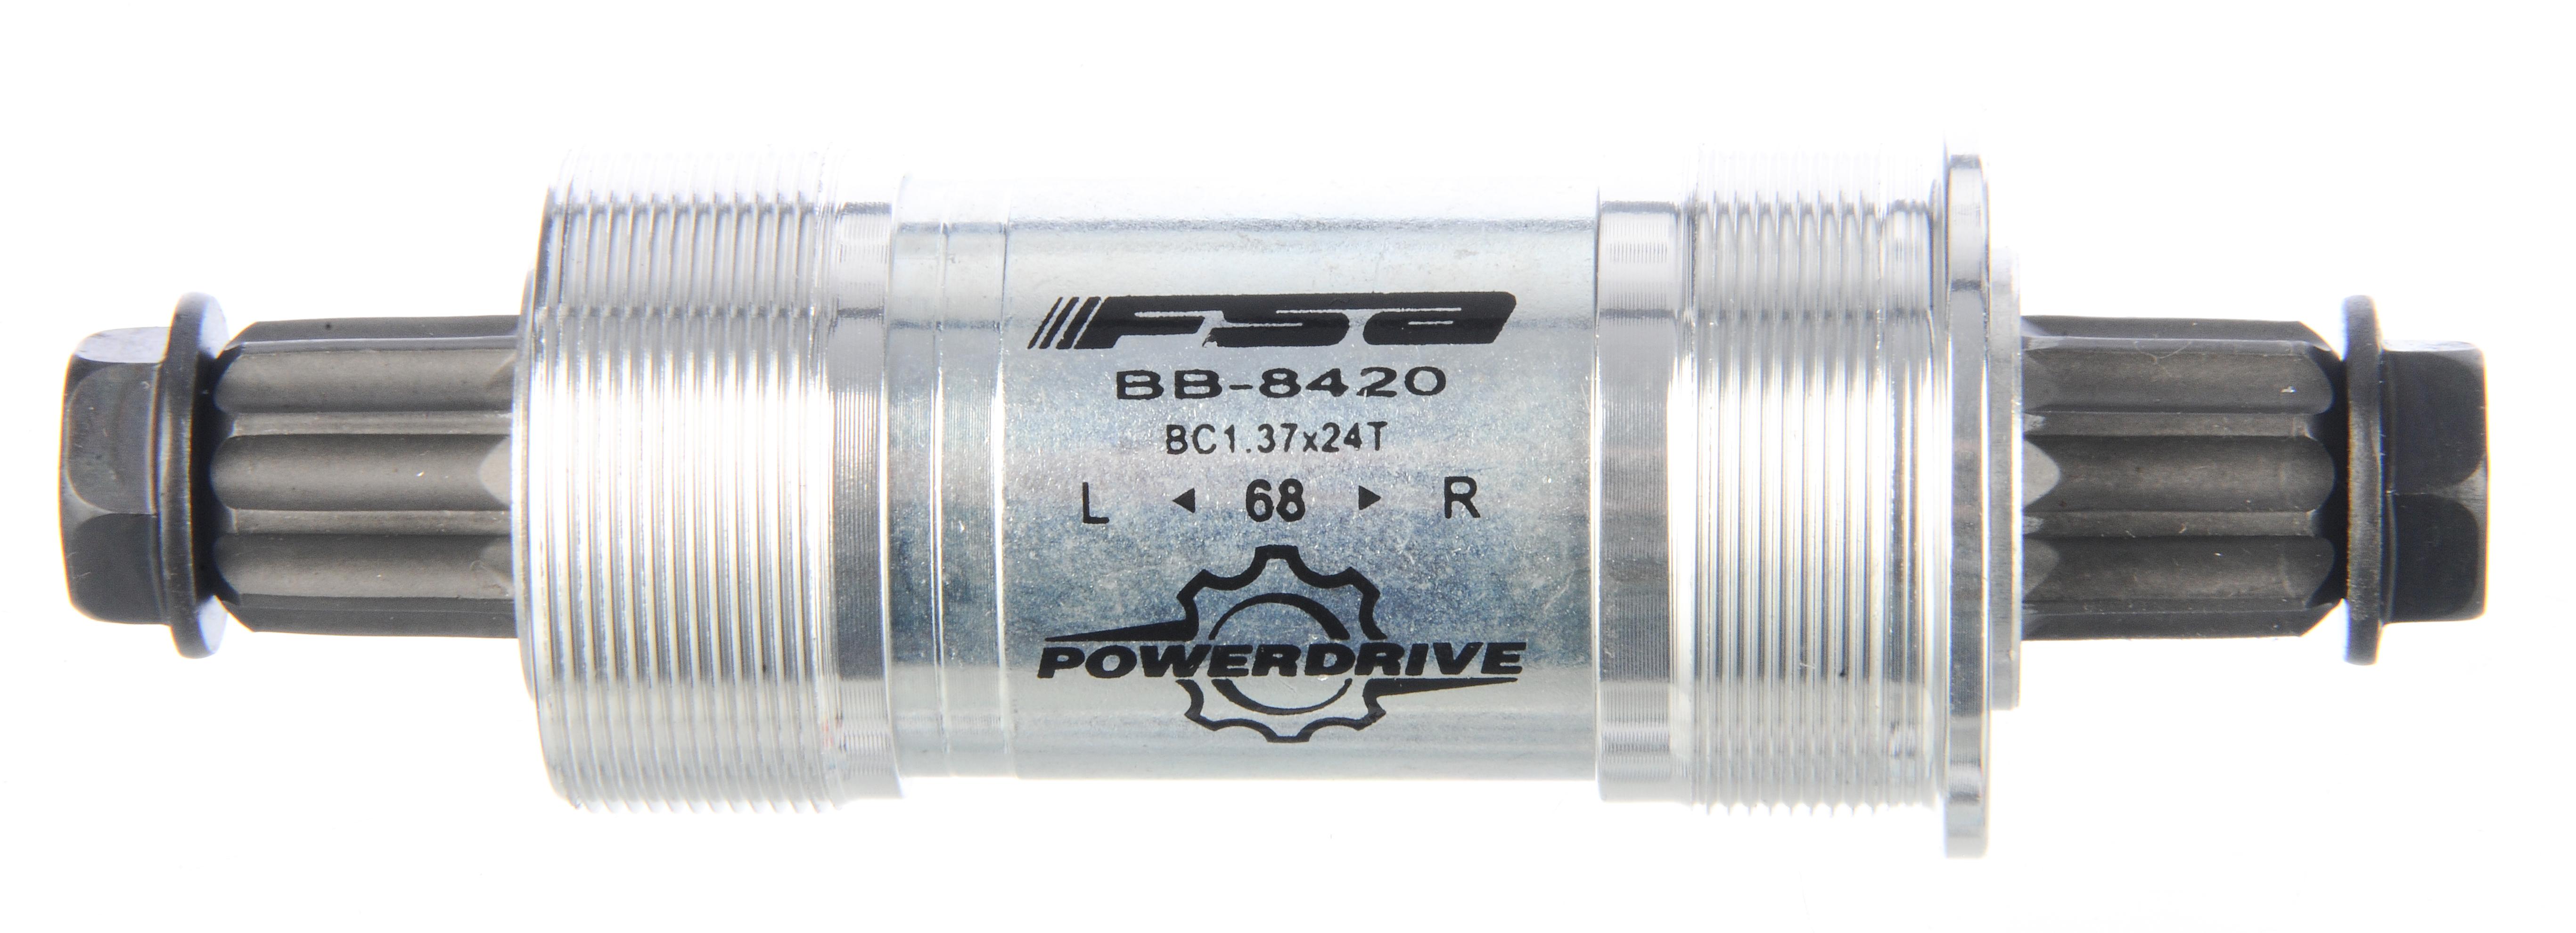 Fsa Power Drive Bottom Bracket (bb-8420)  Silver